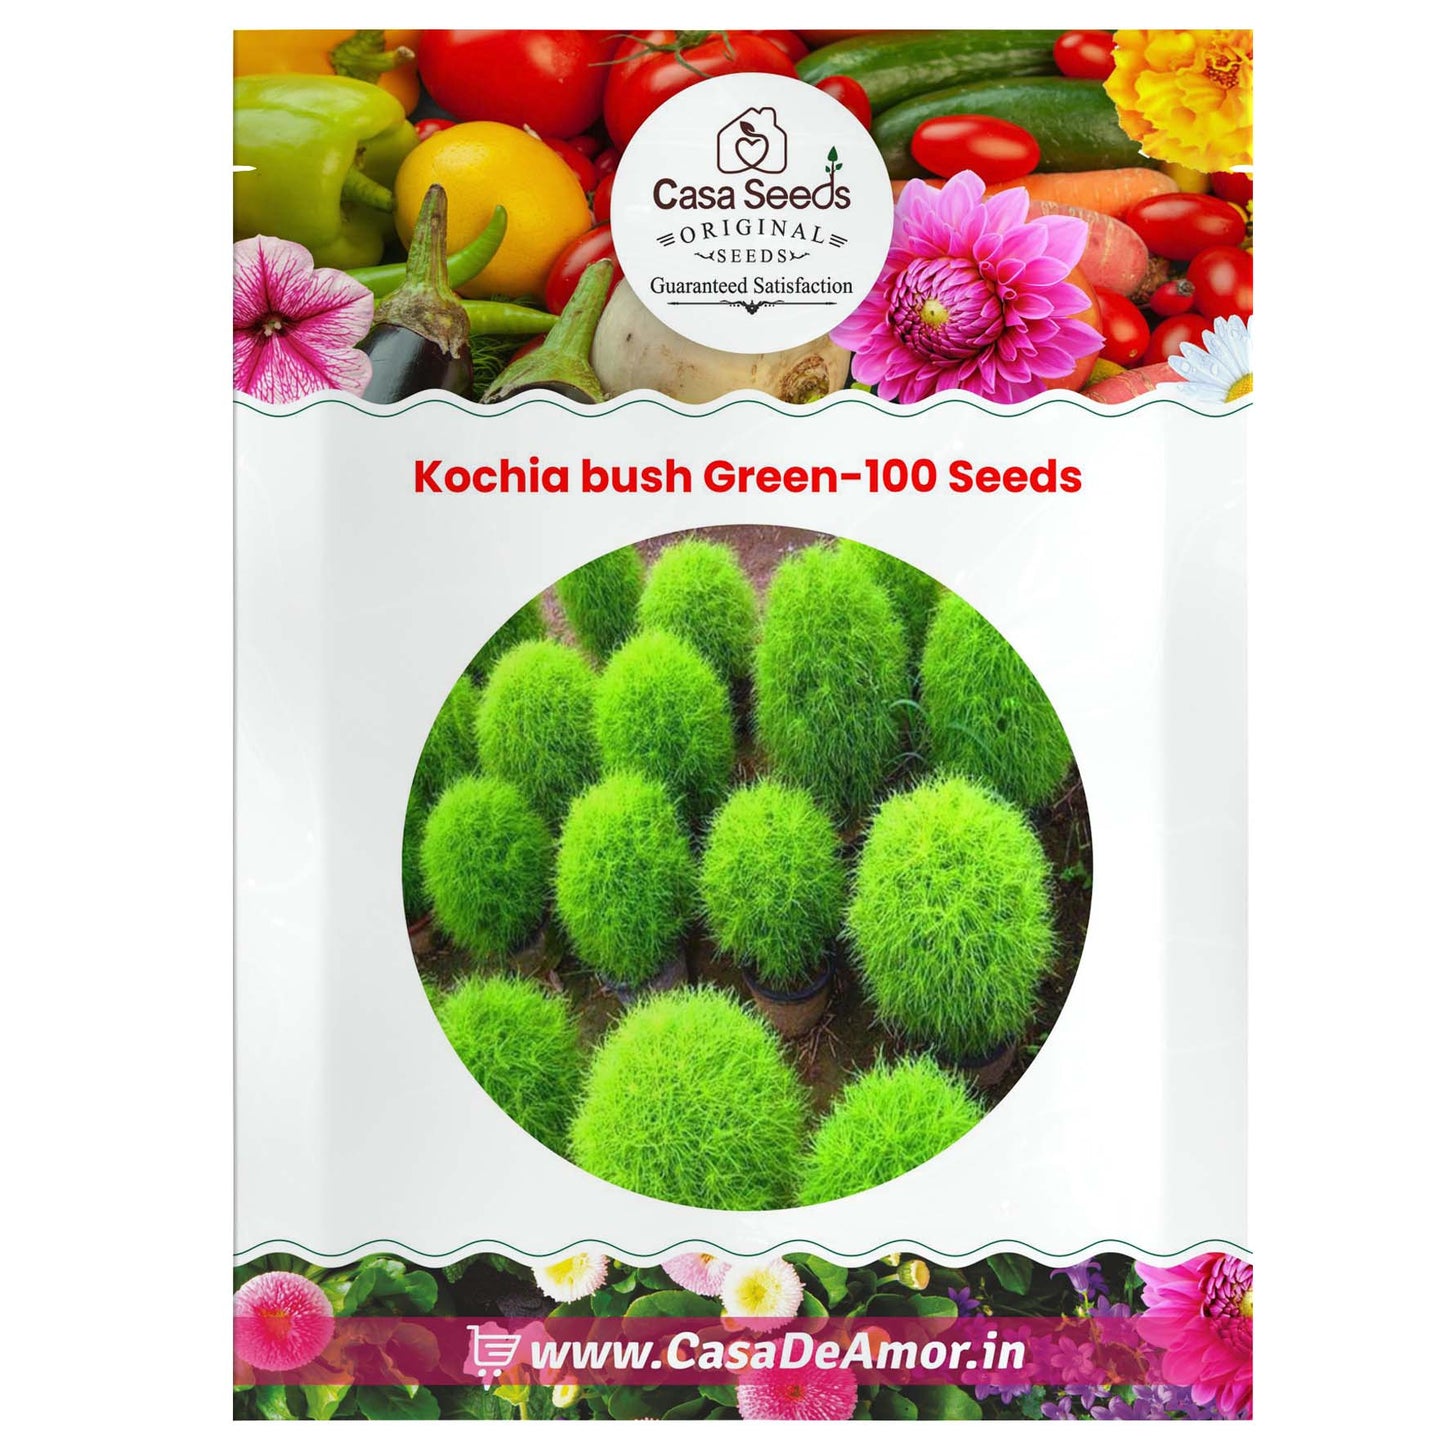 Kochia bush Green-100 Seeds